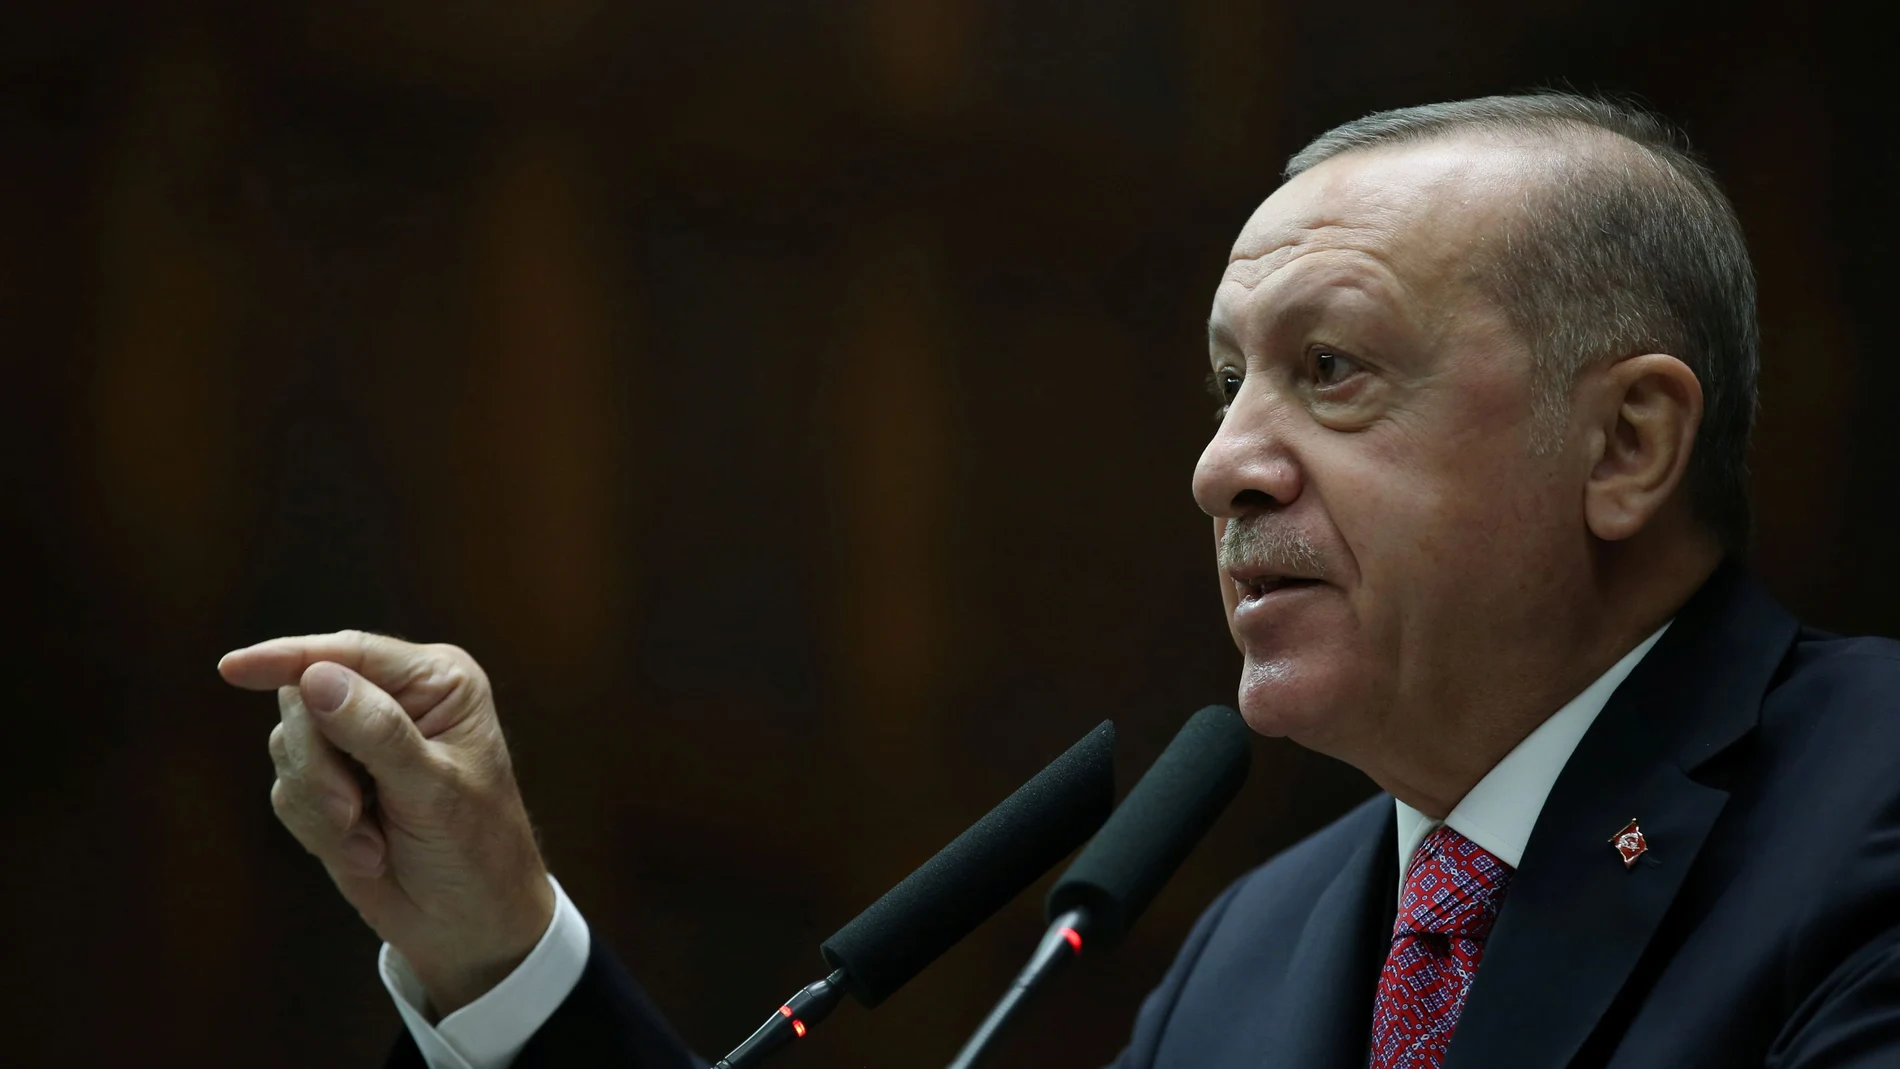 El presidente turco, Tayyip Erdogan